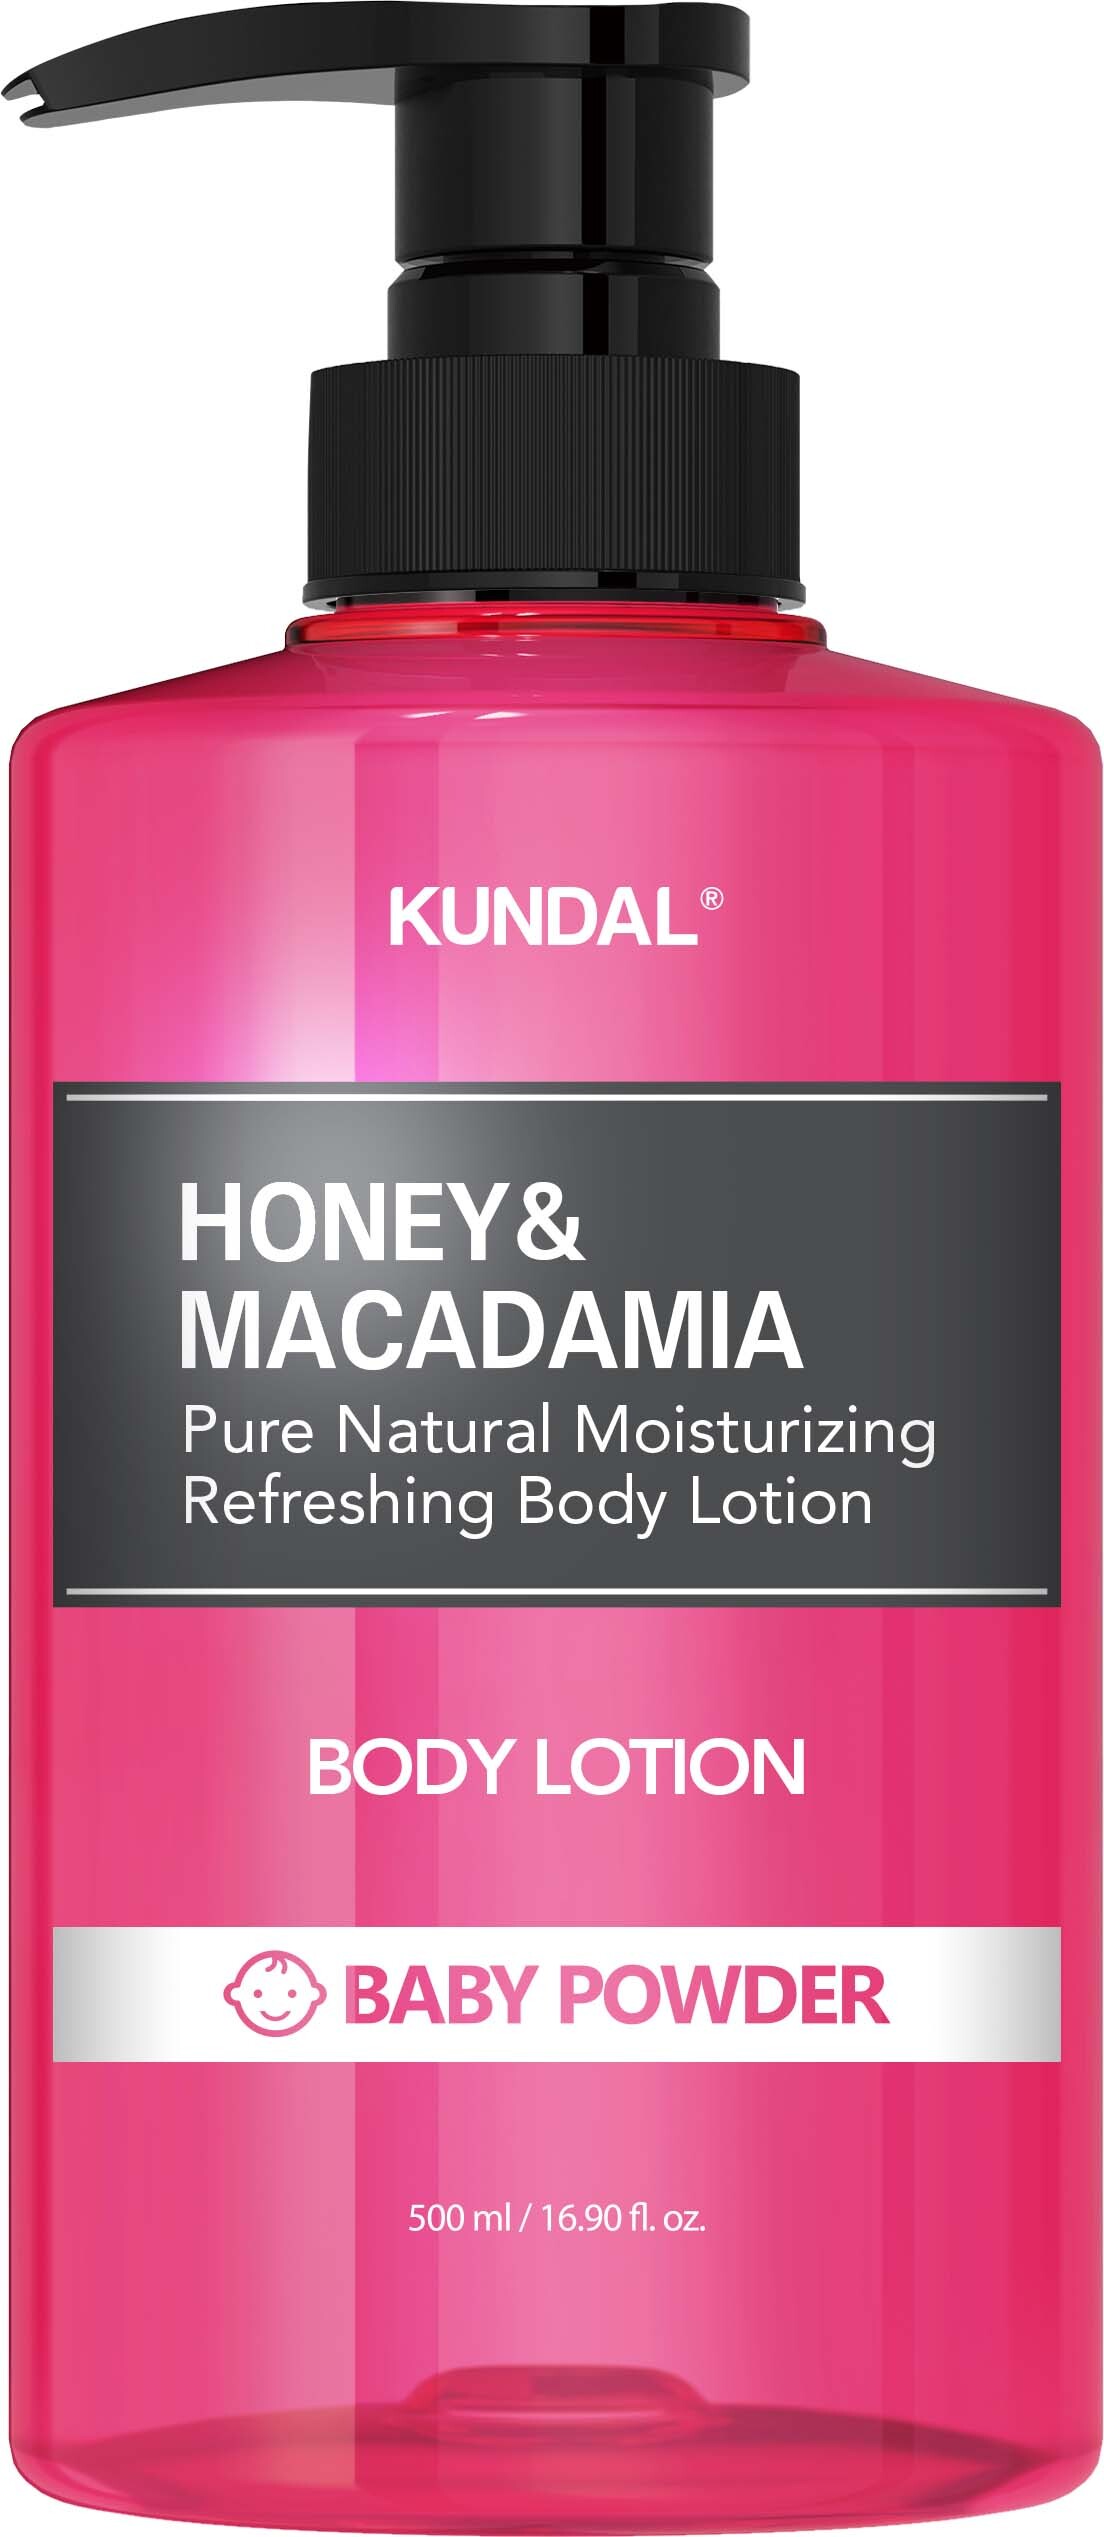 Kundal Honey & Macadamia Pure Body Lotion Baby Powder 500 ml